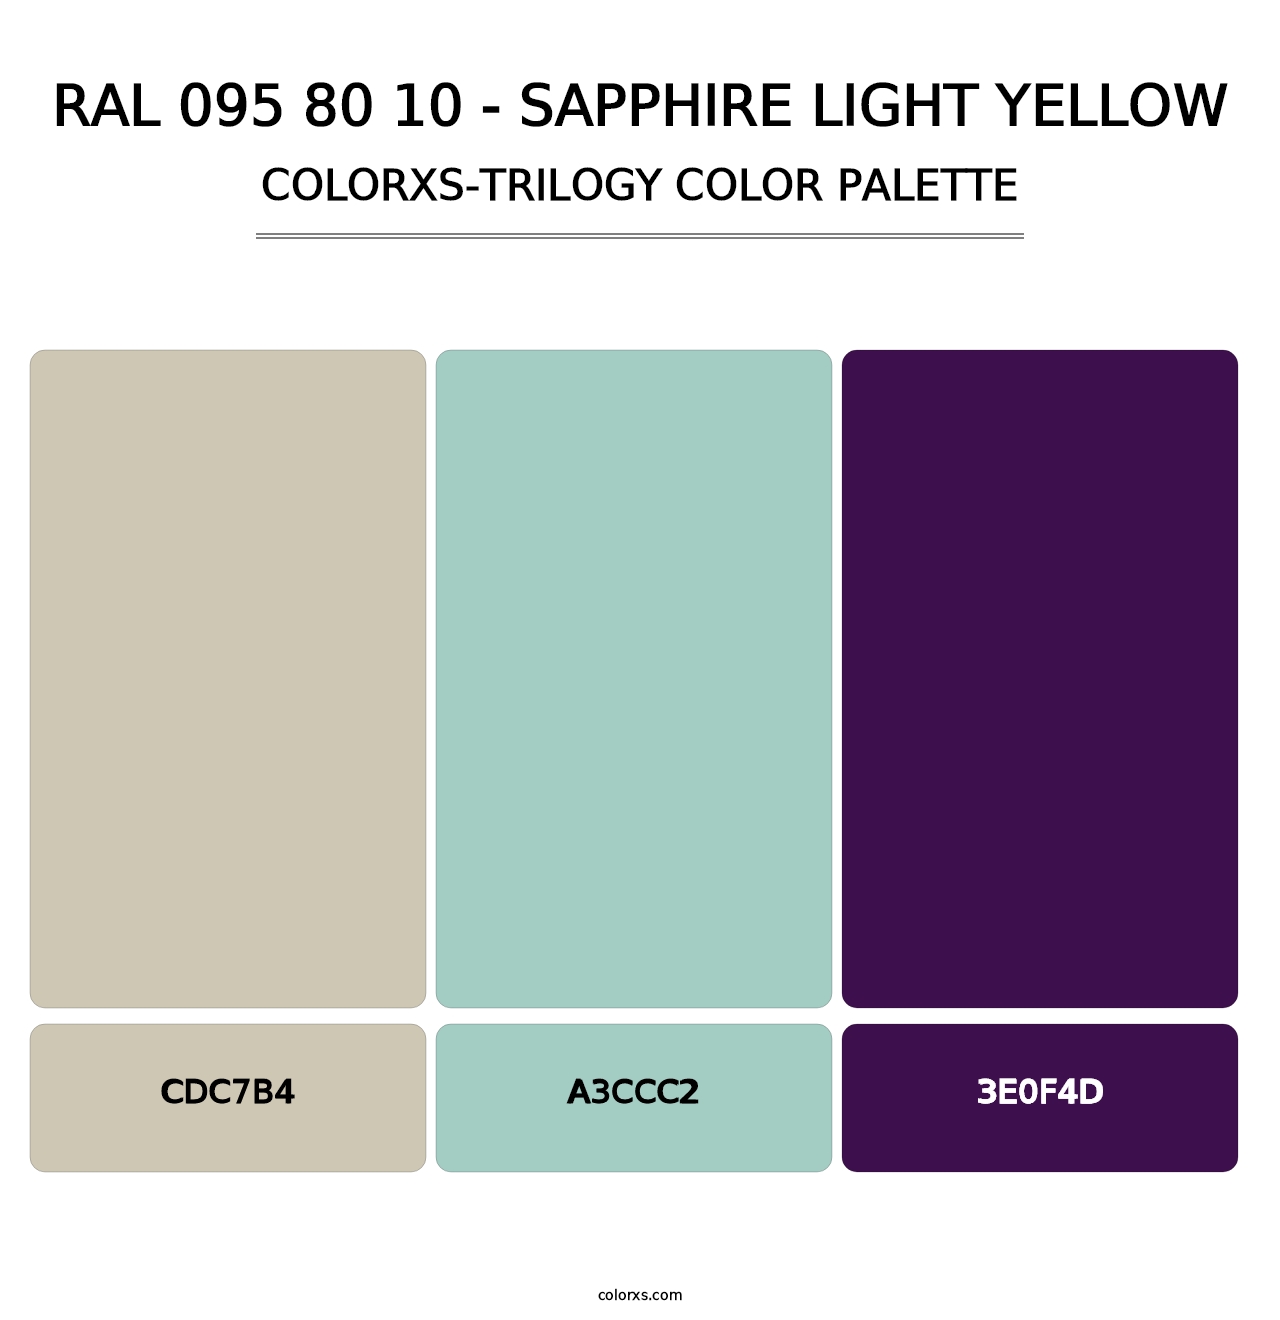 RAL 095 80 10 - Sapphire Light Yellow - Colorxs Trilogy Palette